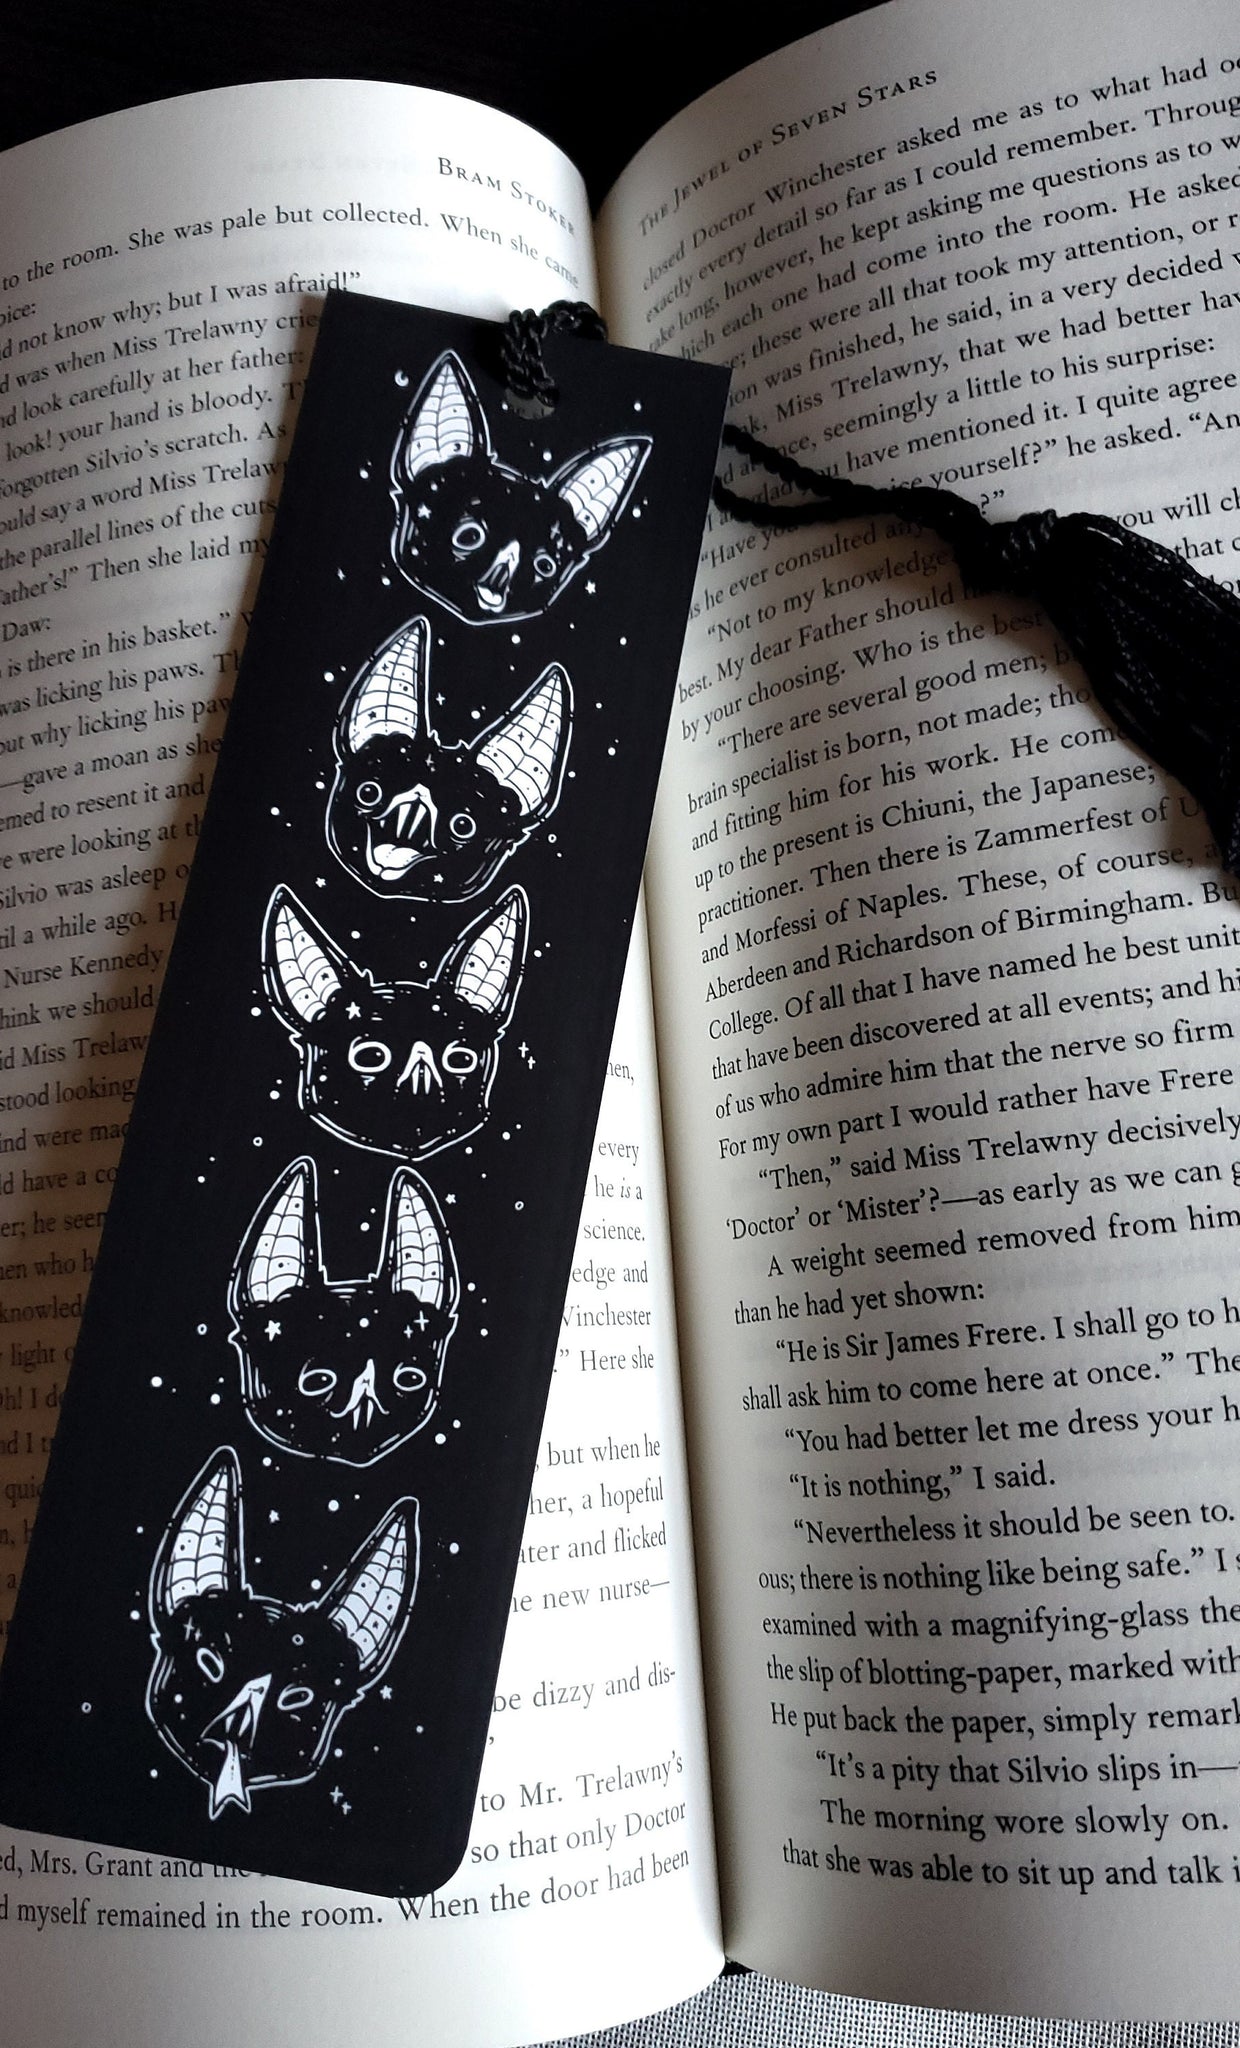 Black Vampire Bat Bookmark, Spooky cute, Goth